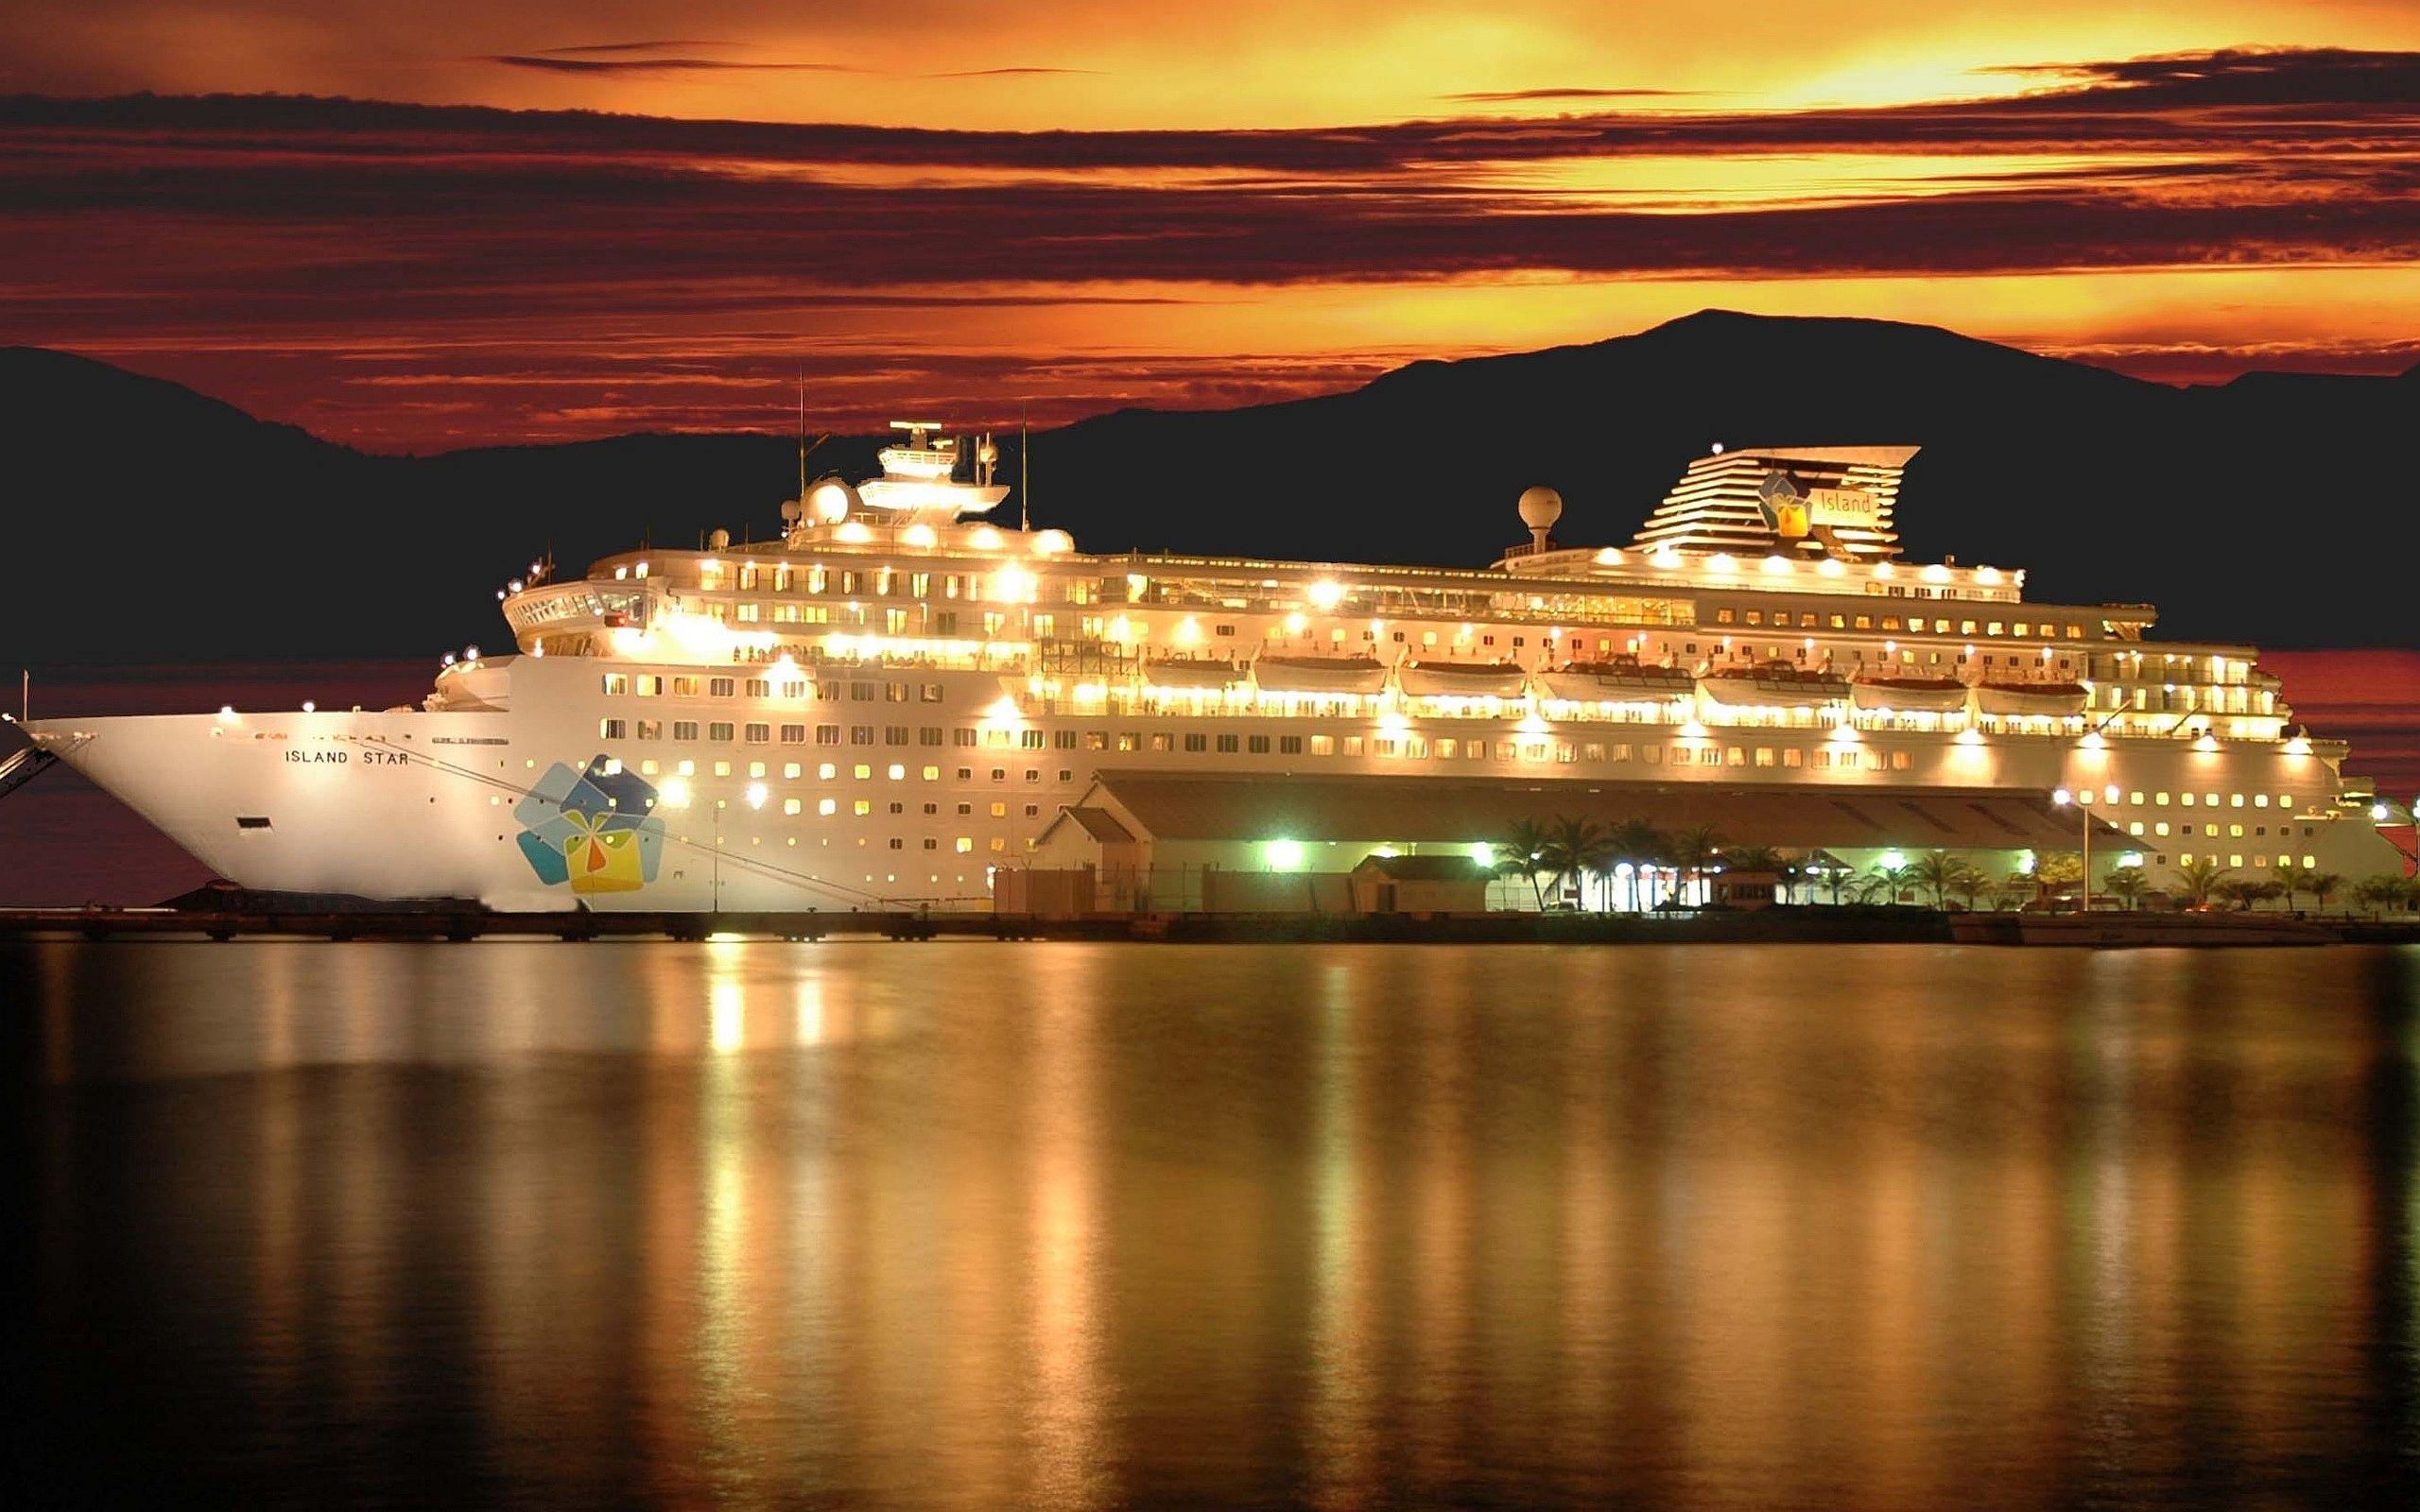 cruise ship at night images